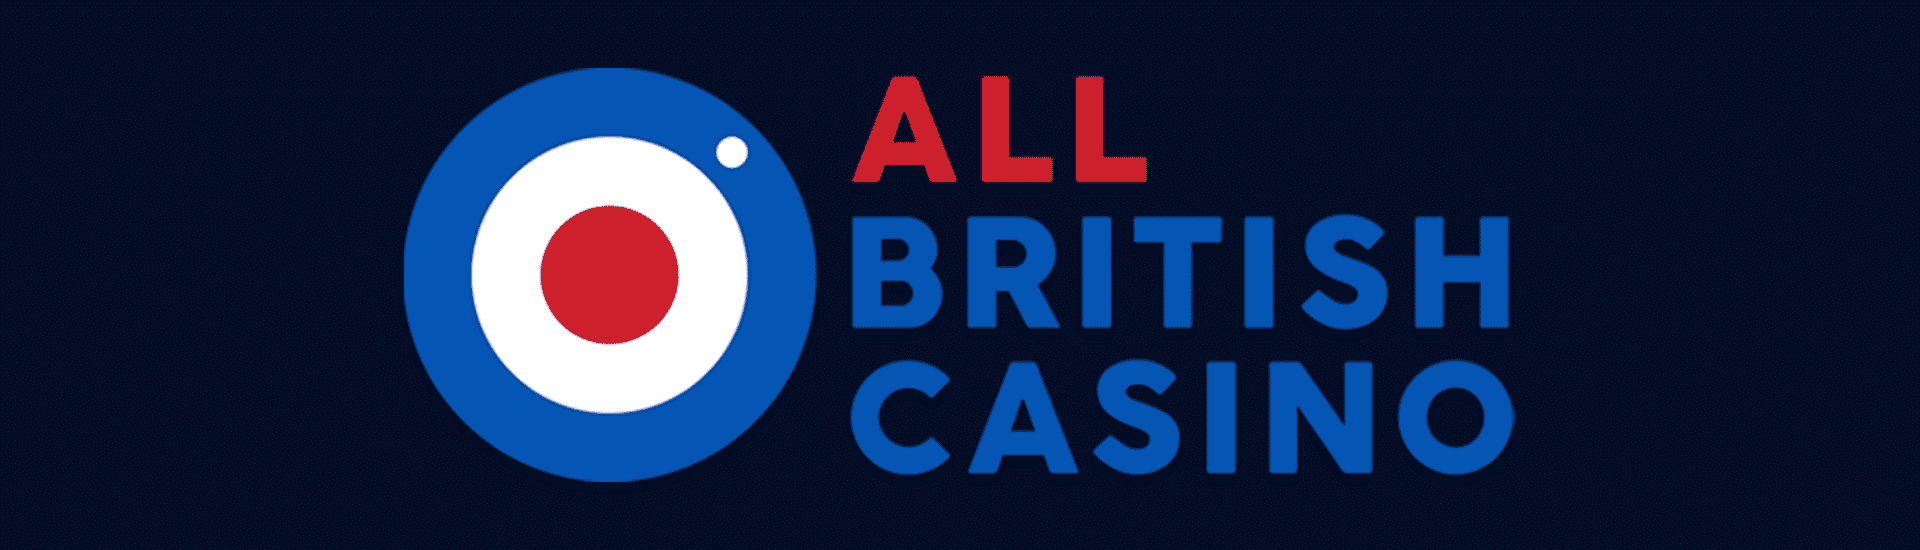 All British Casino Featured Image